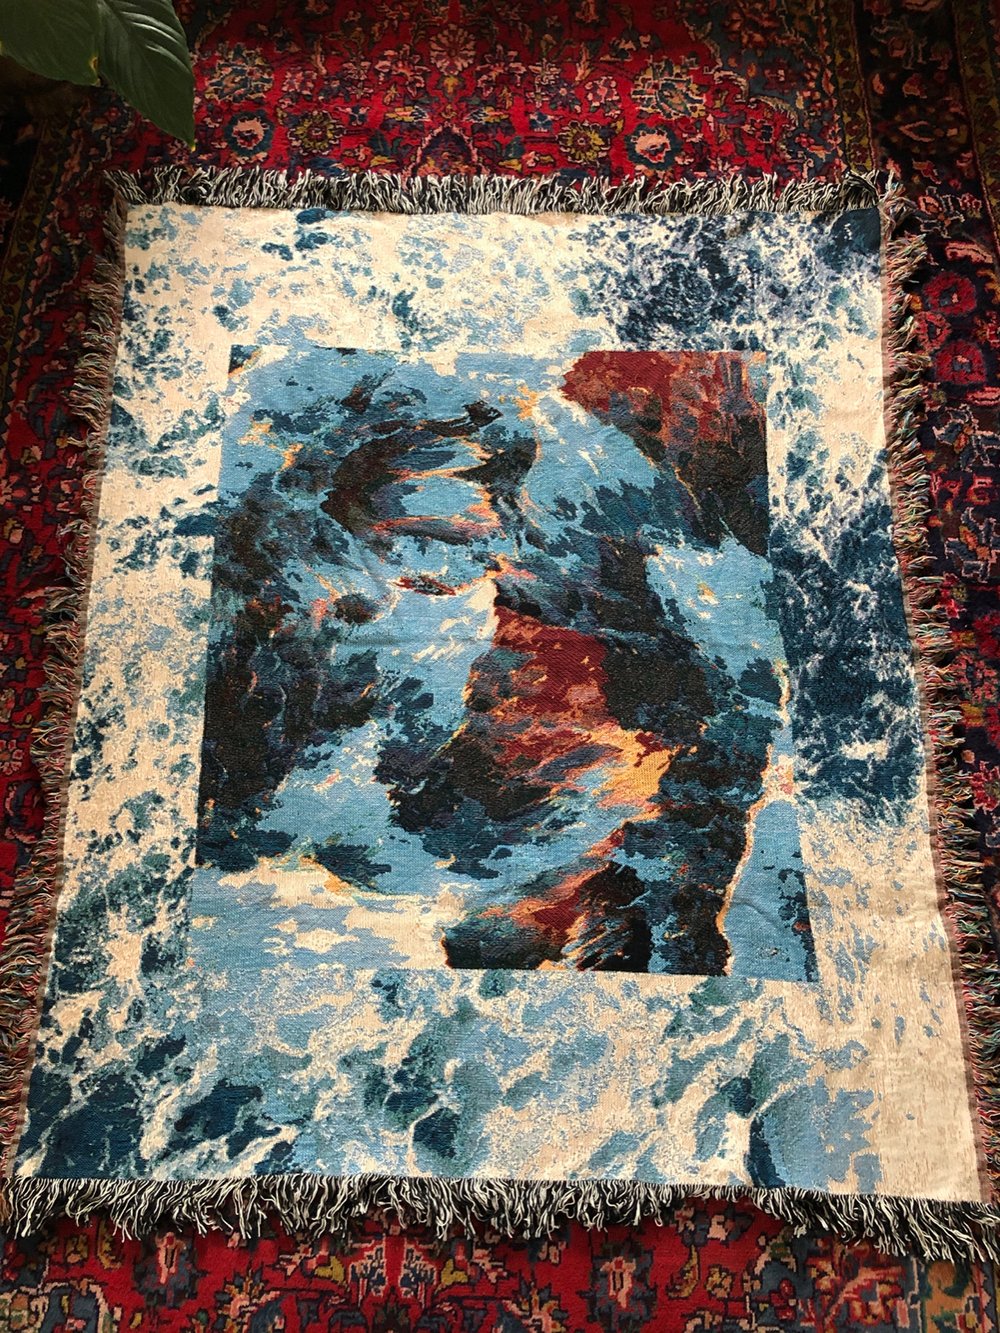 Woven Blanket #28